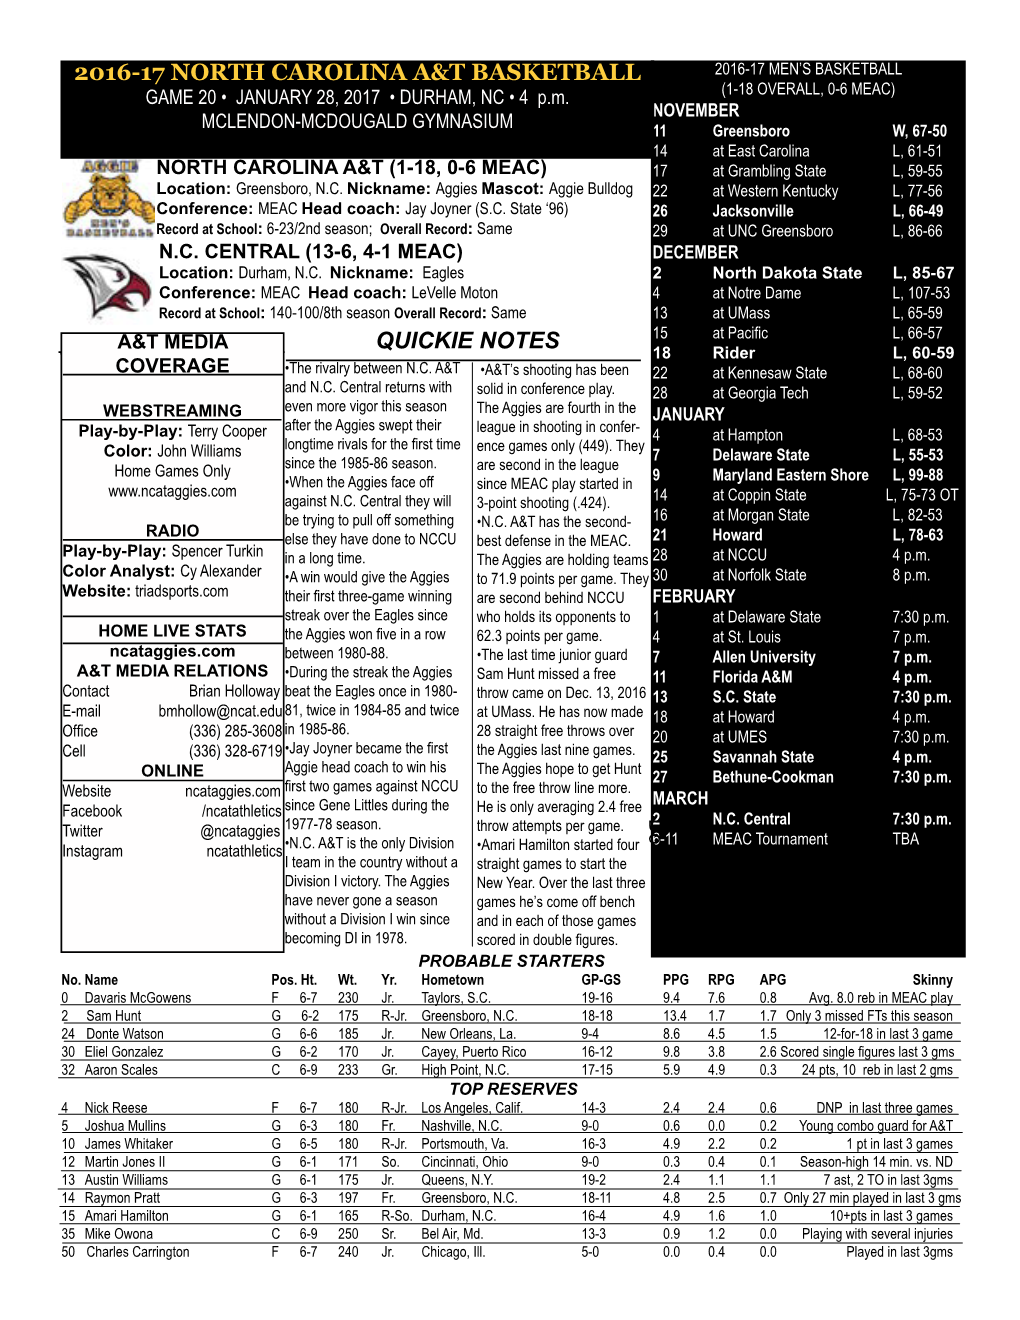 2016-17 North Carolina A&T Basketball Quickie Notes